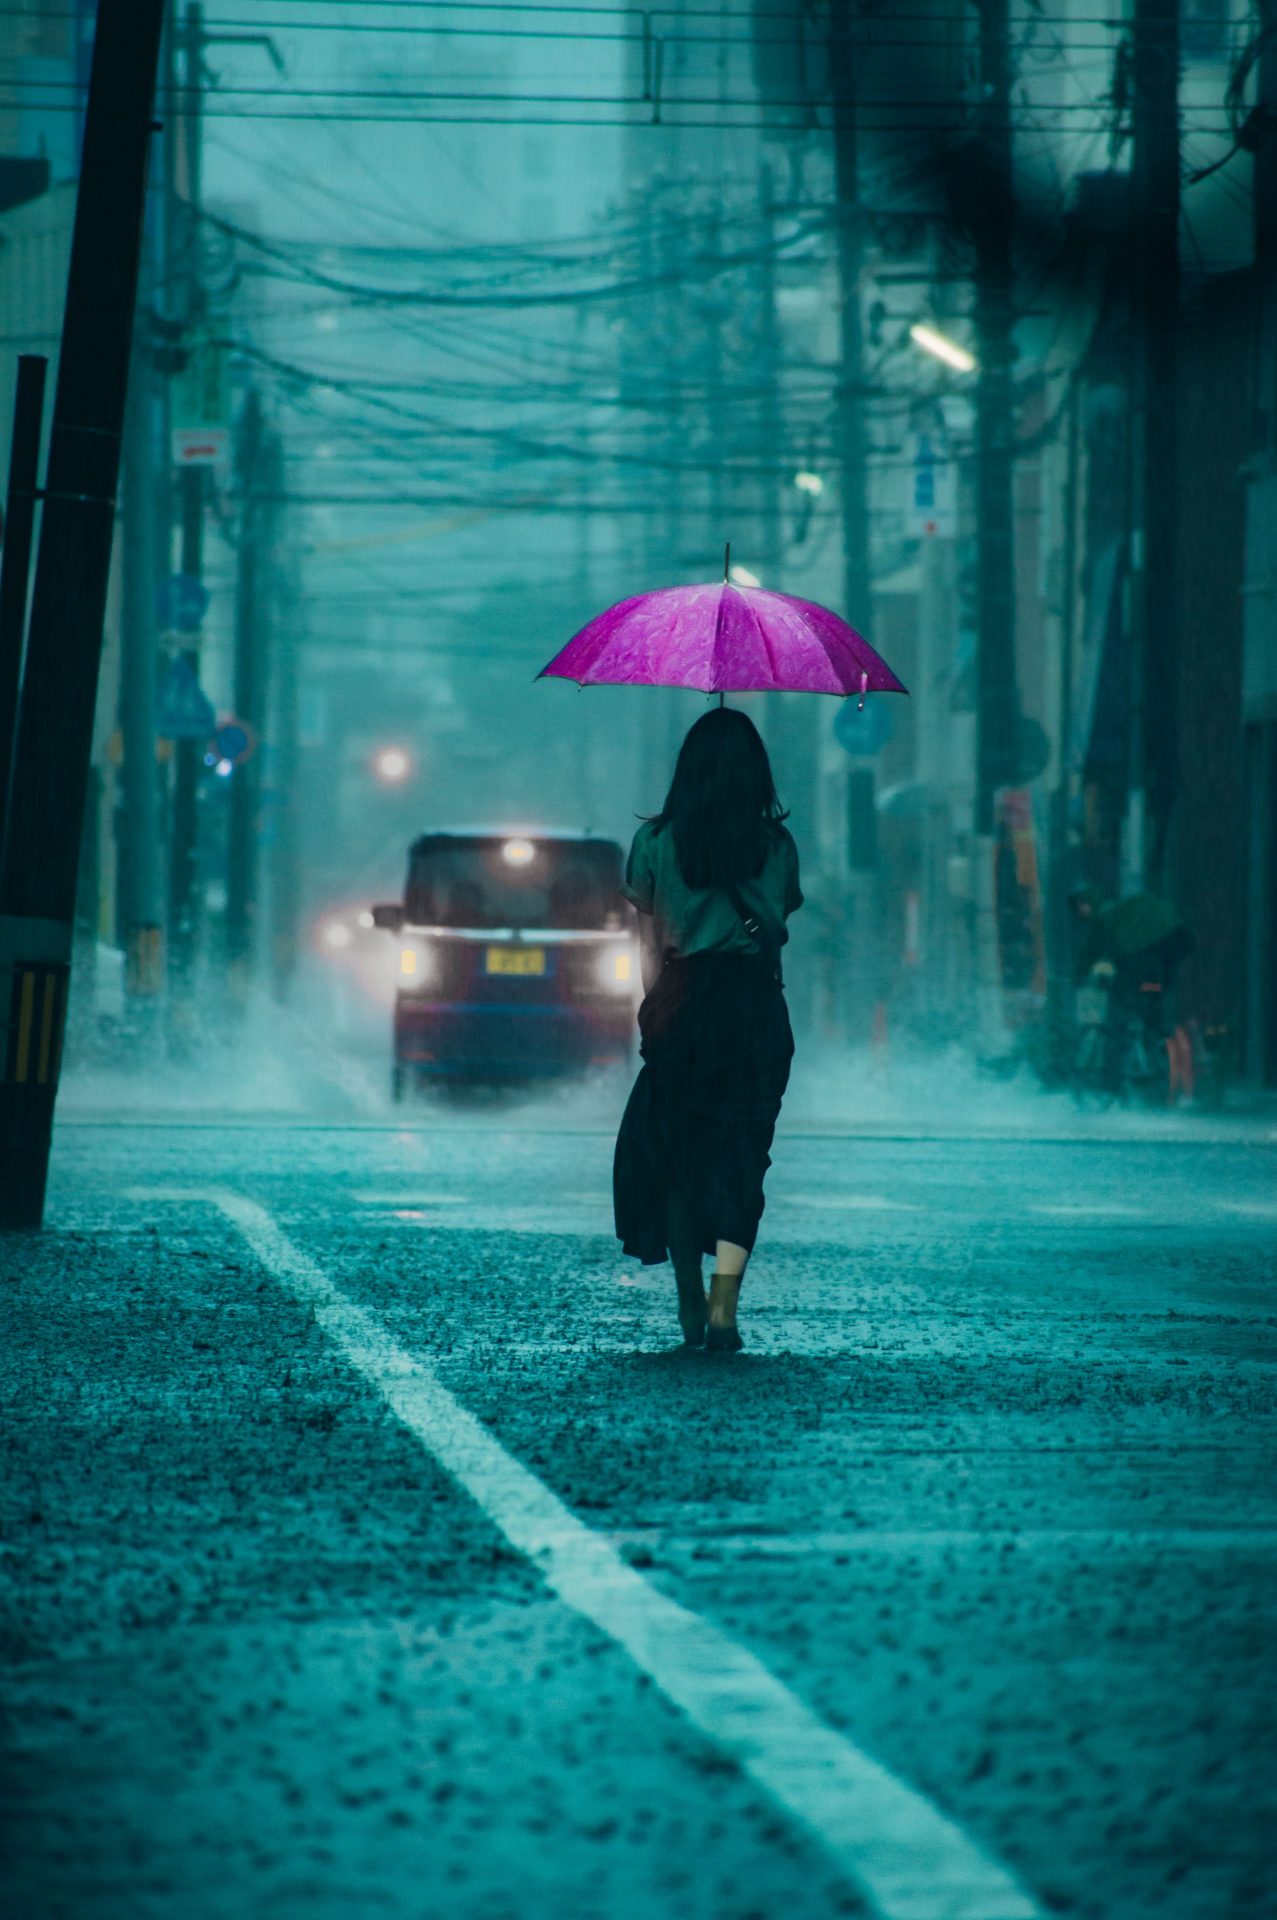 A women with purple umbrella walking in a heavy rainfaill, Hiroshima